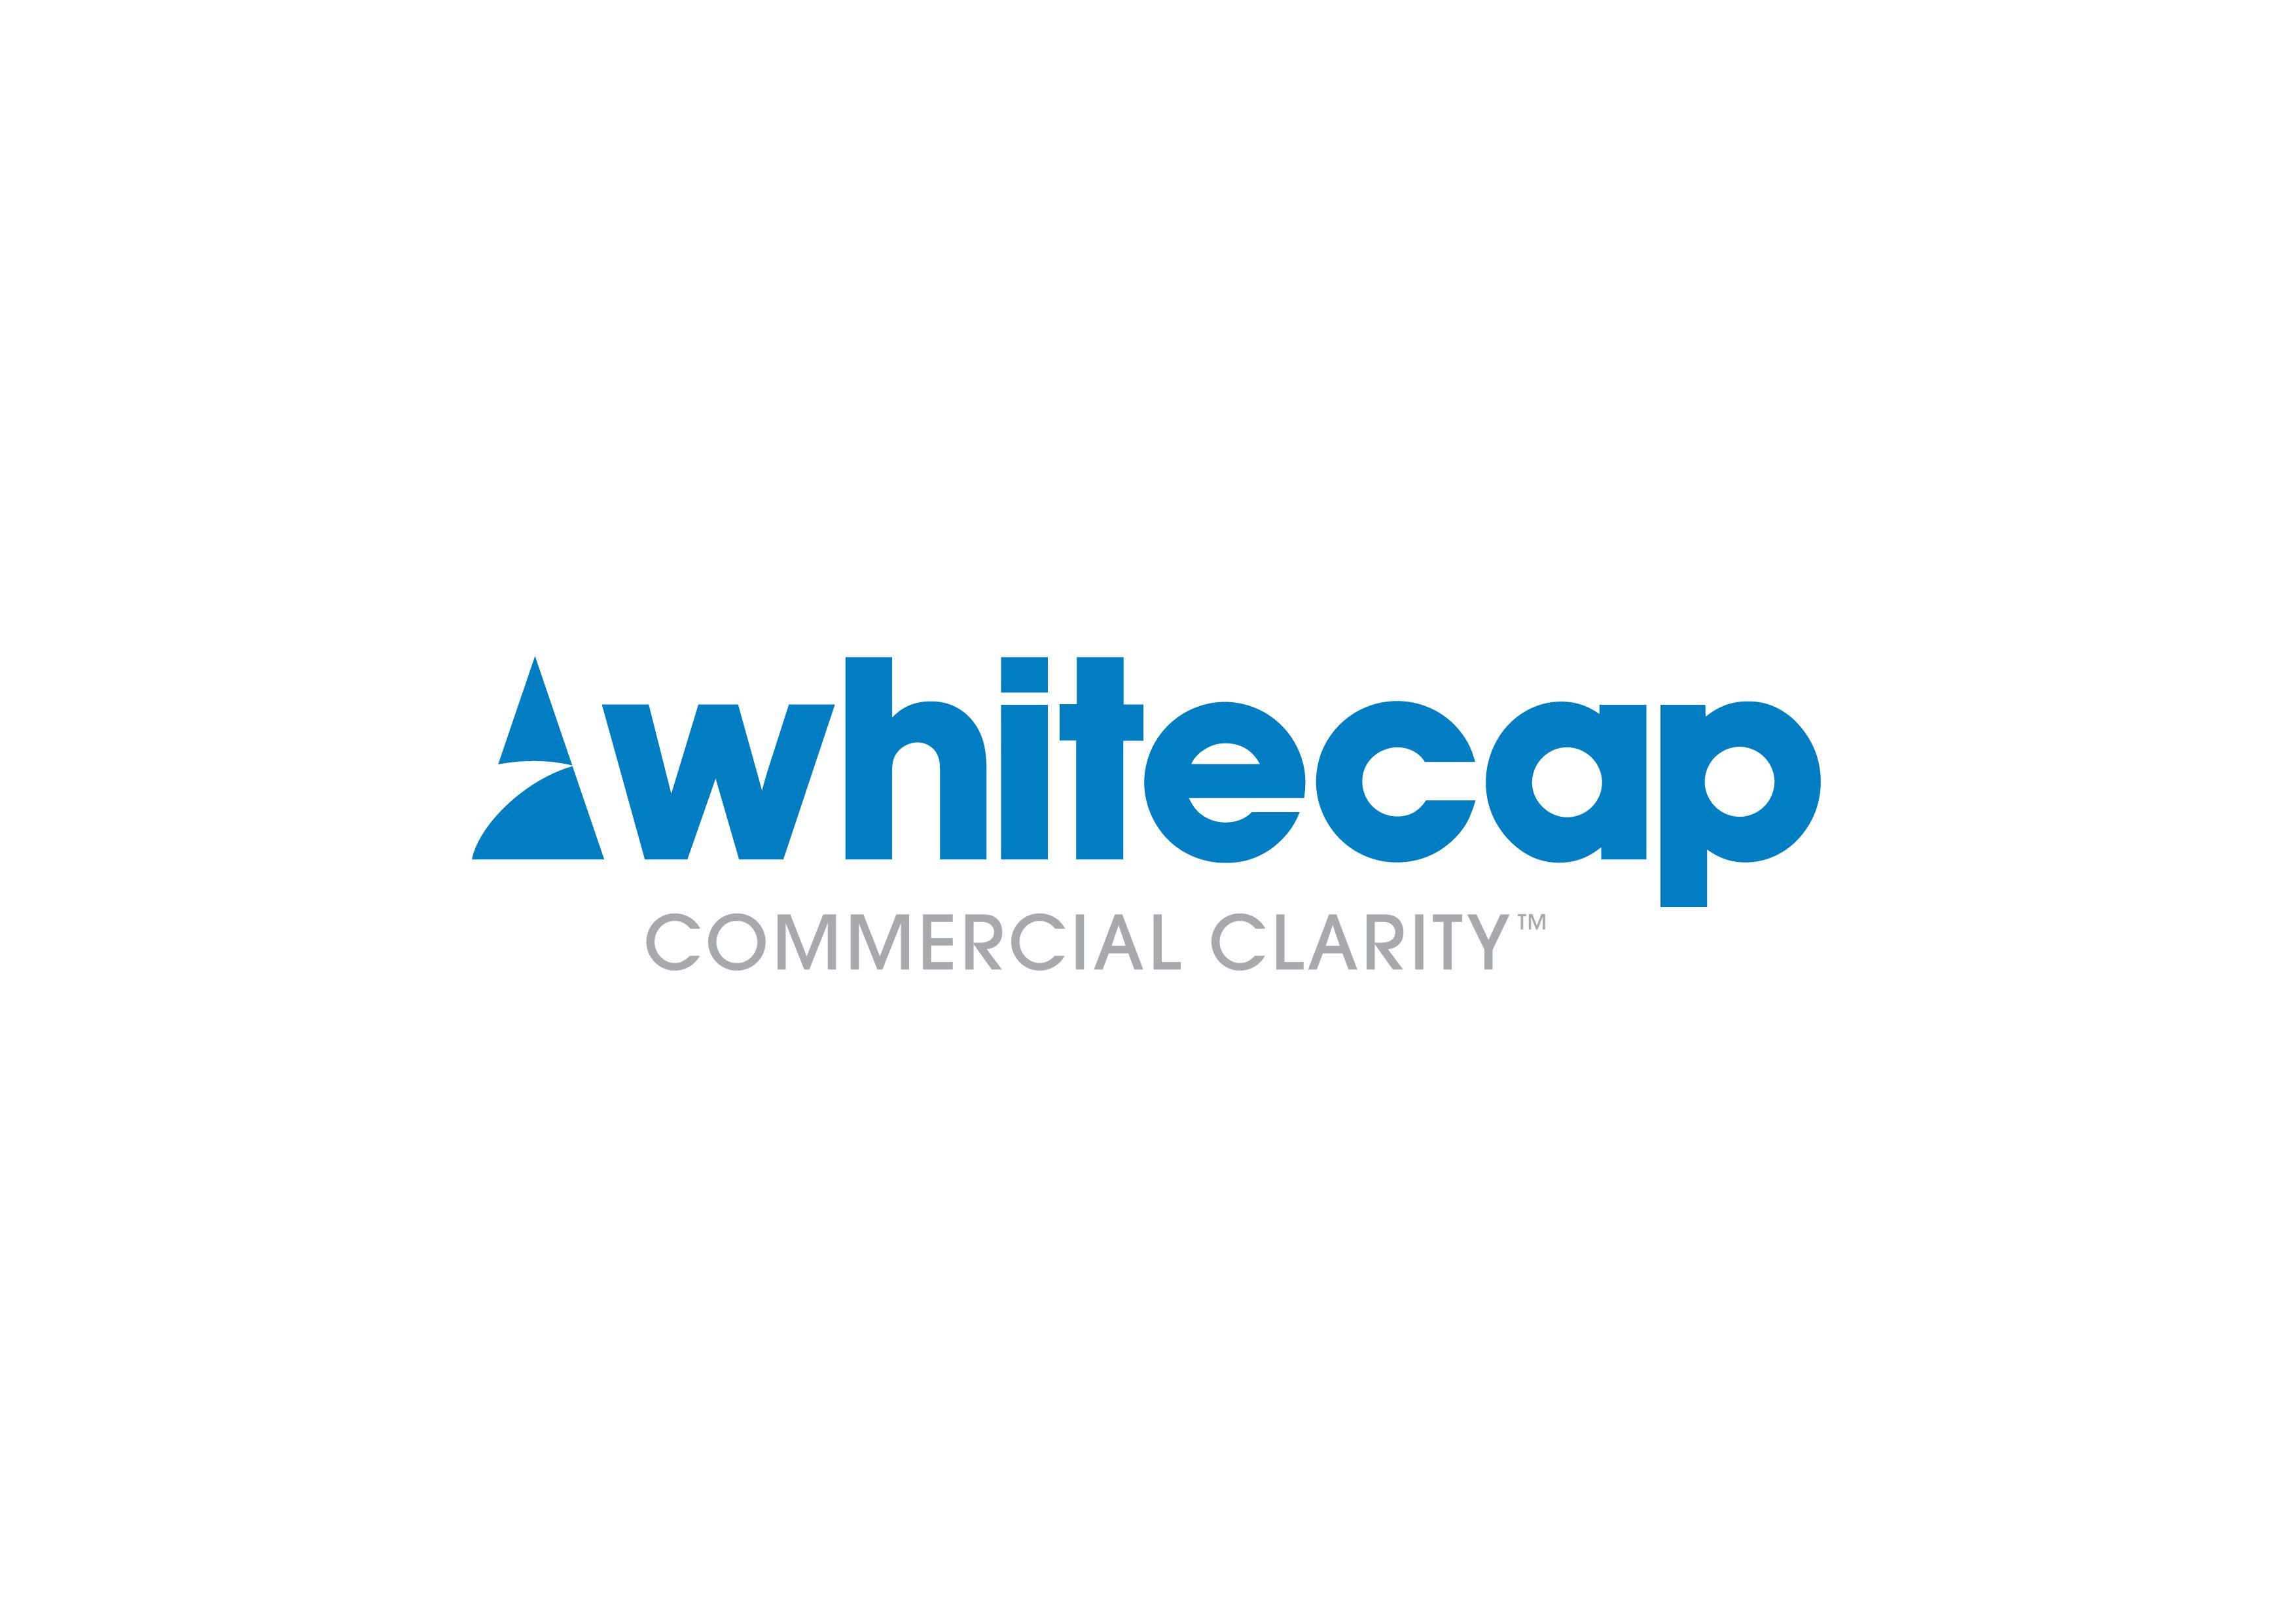 White Cap Logo - Whitecap to conduct research into Leeds City Region FinTech ...